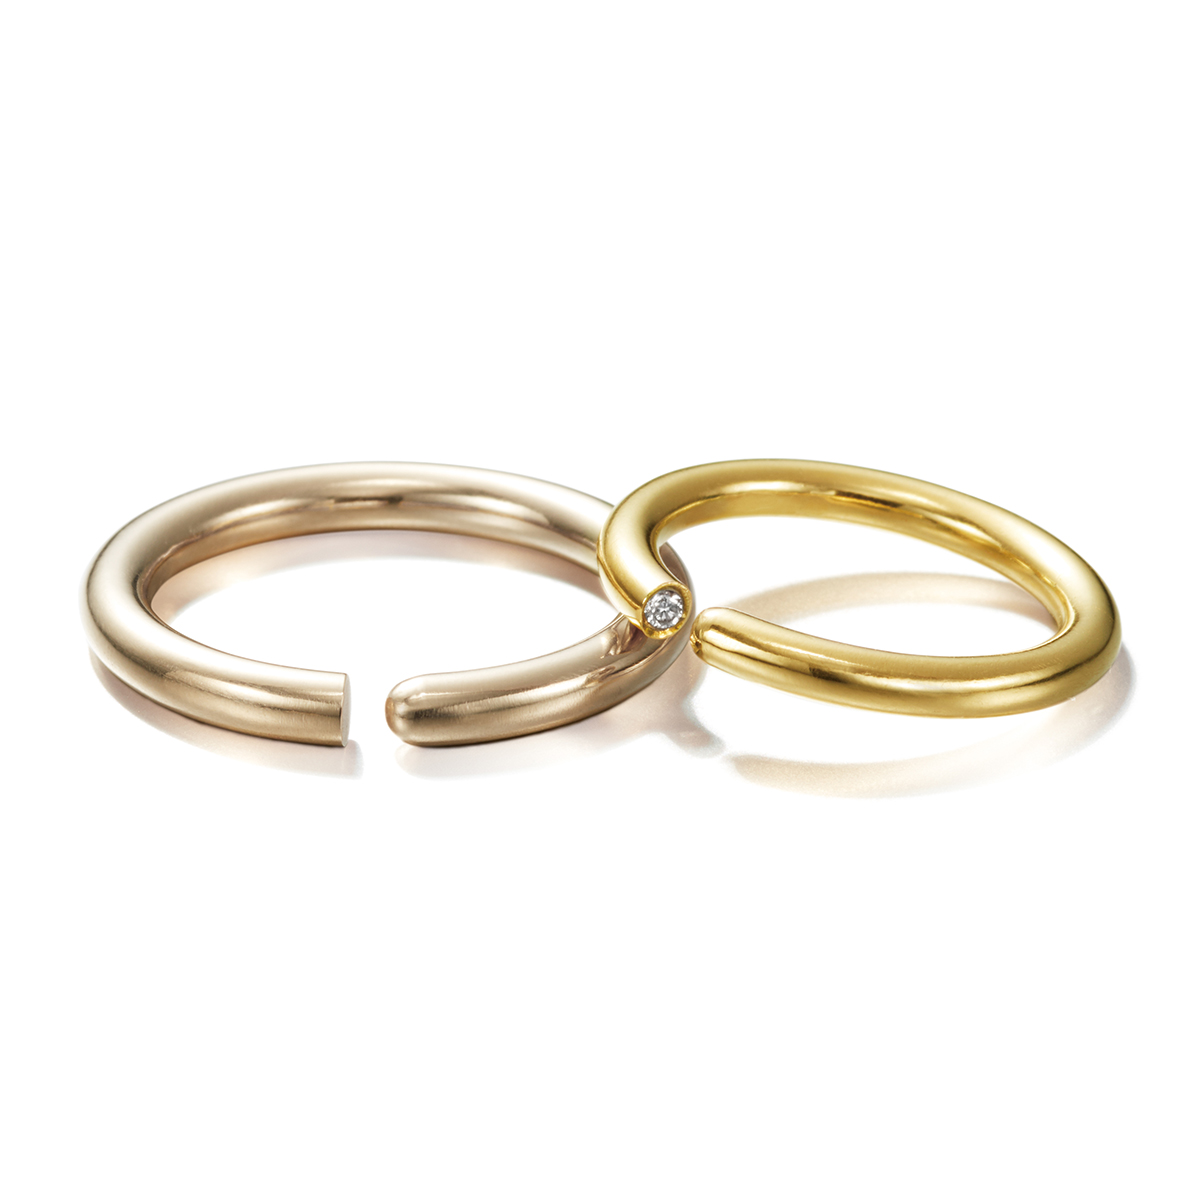 Lia Di Gregorio | Items - Wedding Rings | H.P.FRANCE BIJOUX BRIDAL